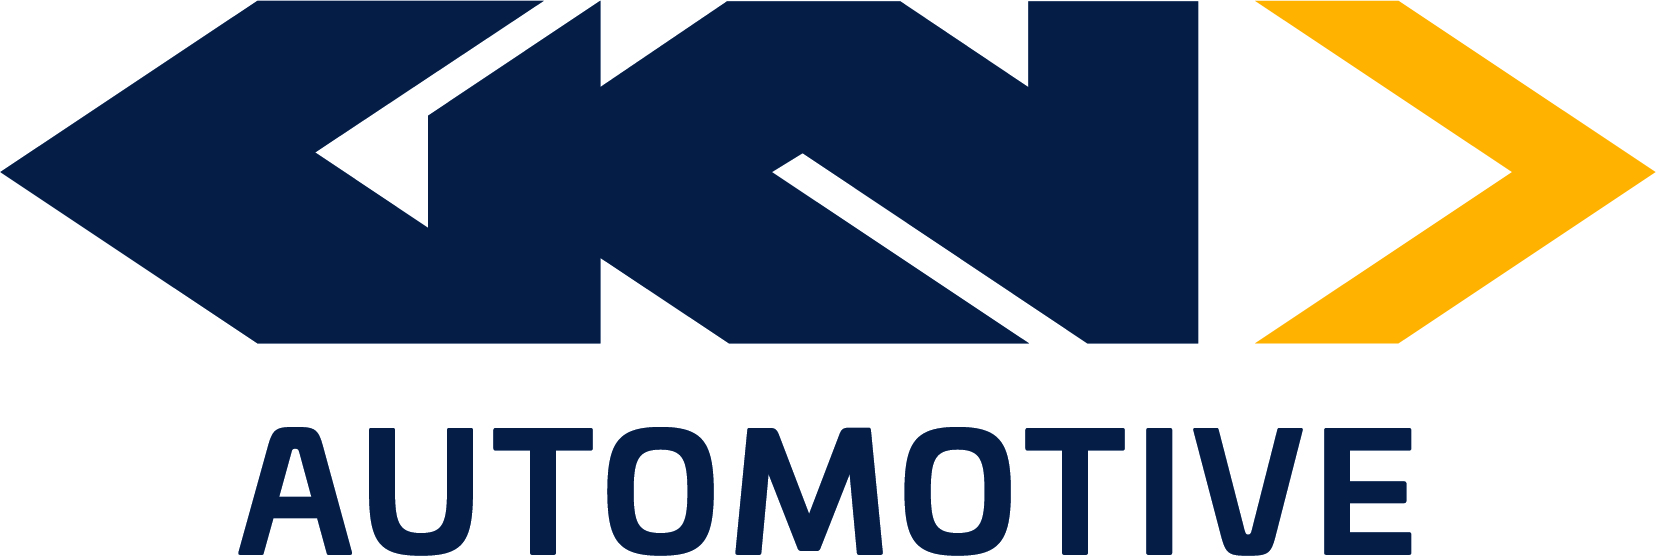 GKN Automotive Logo 2021 CMYK Master.jpg